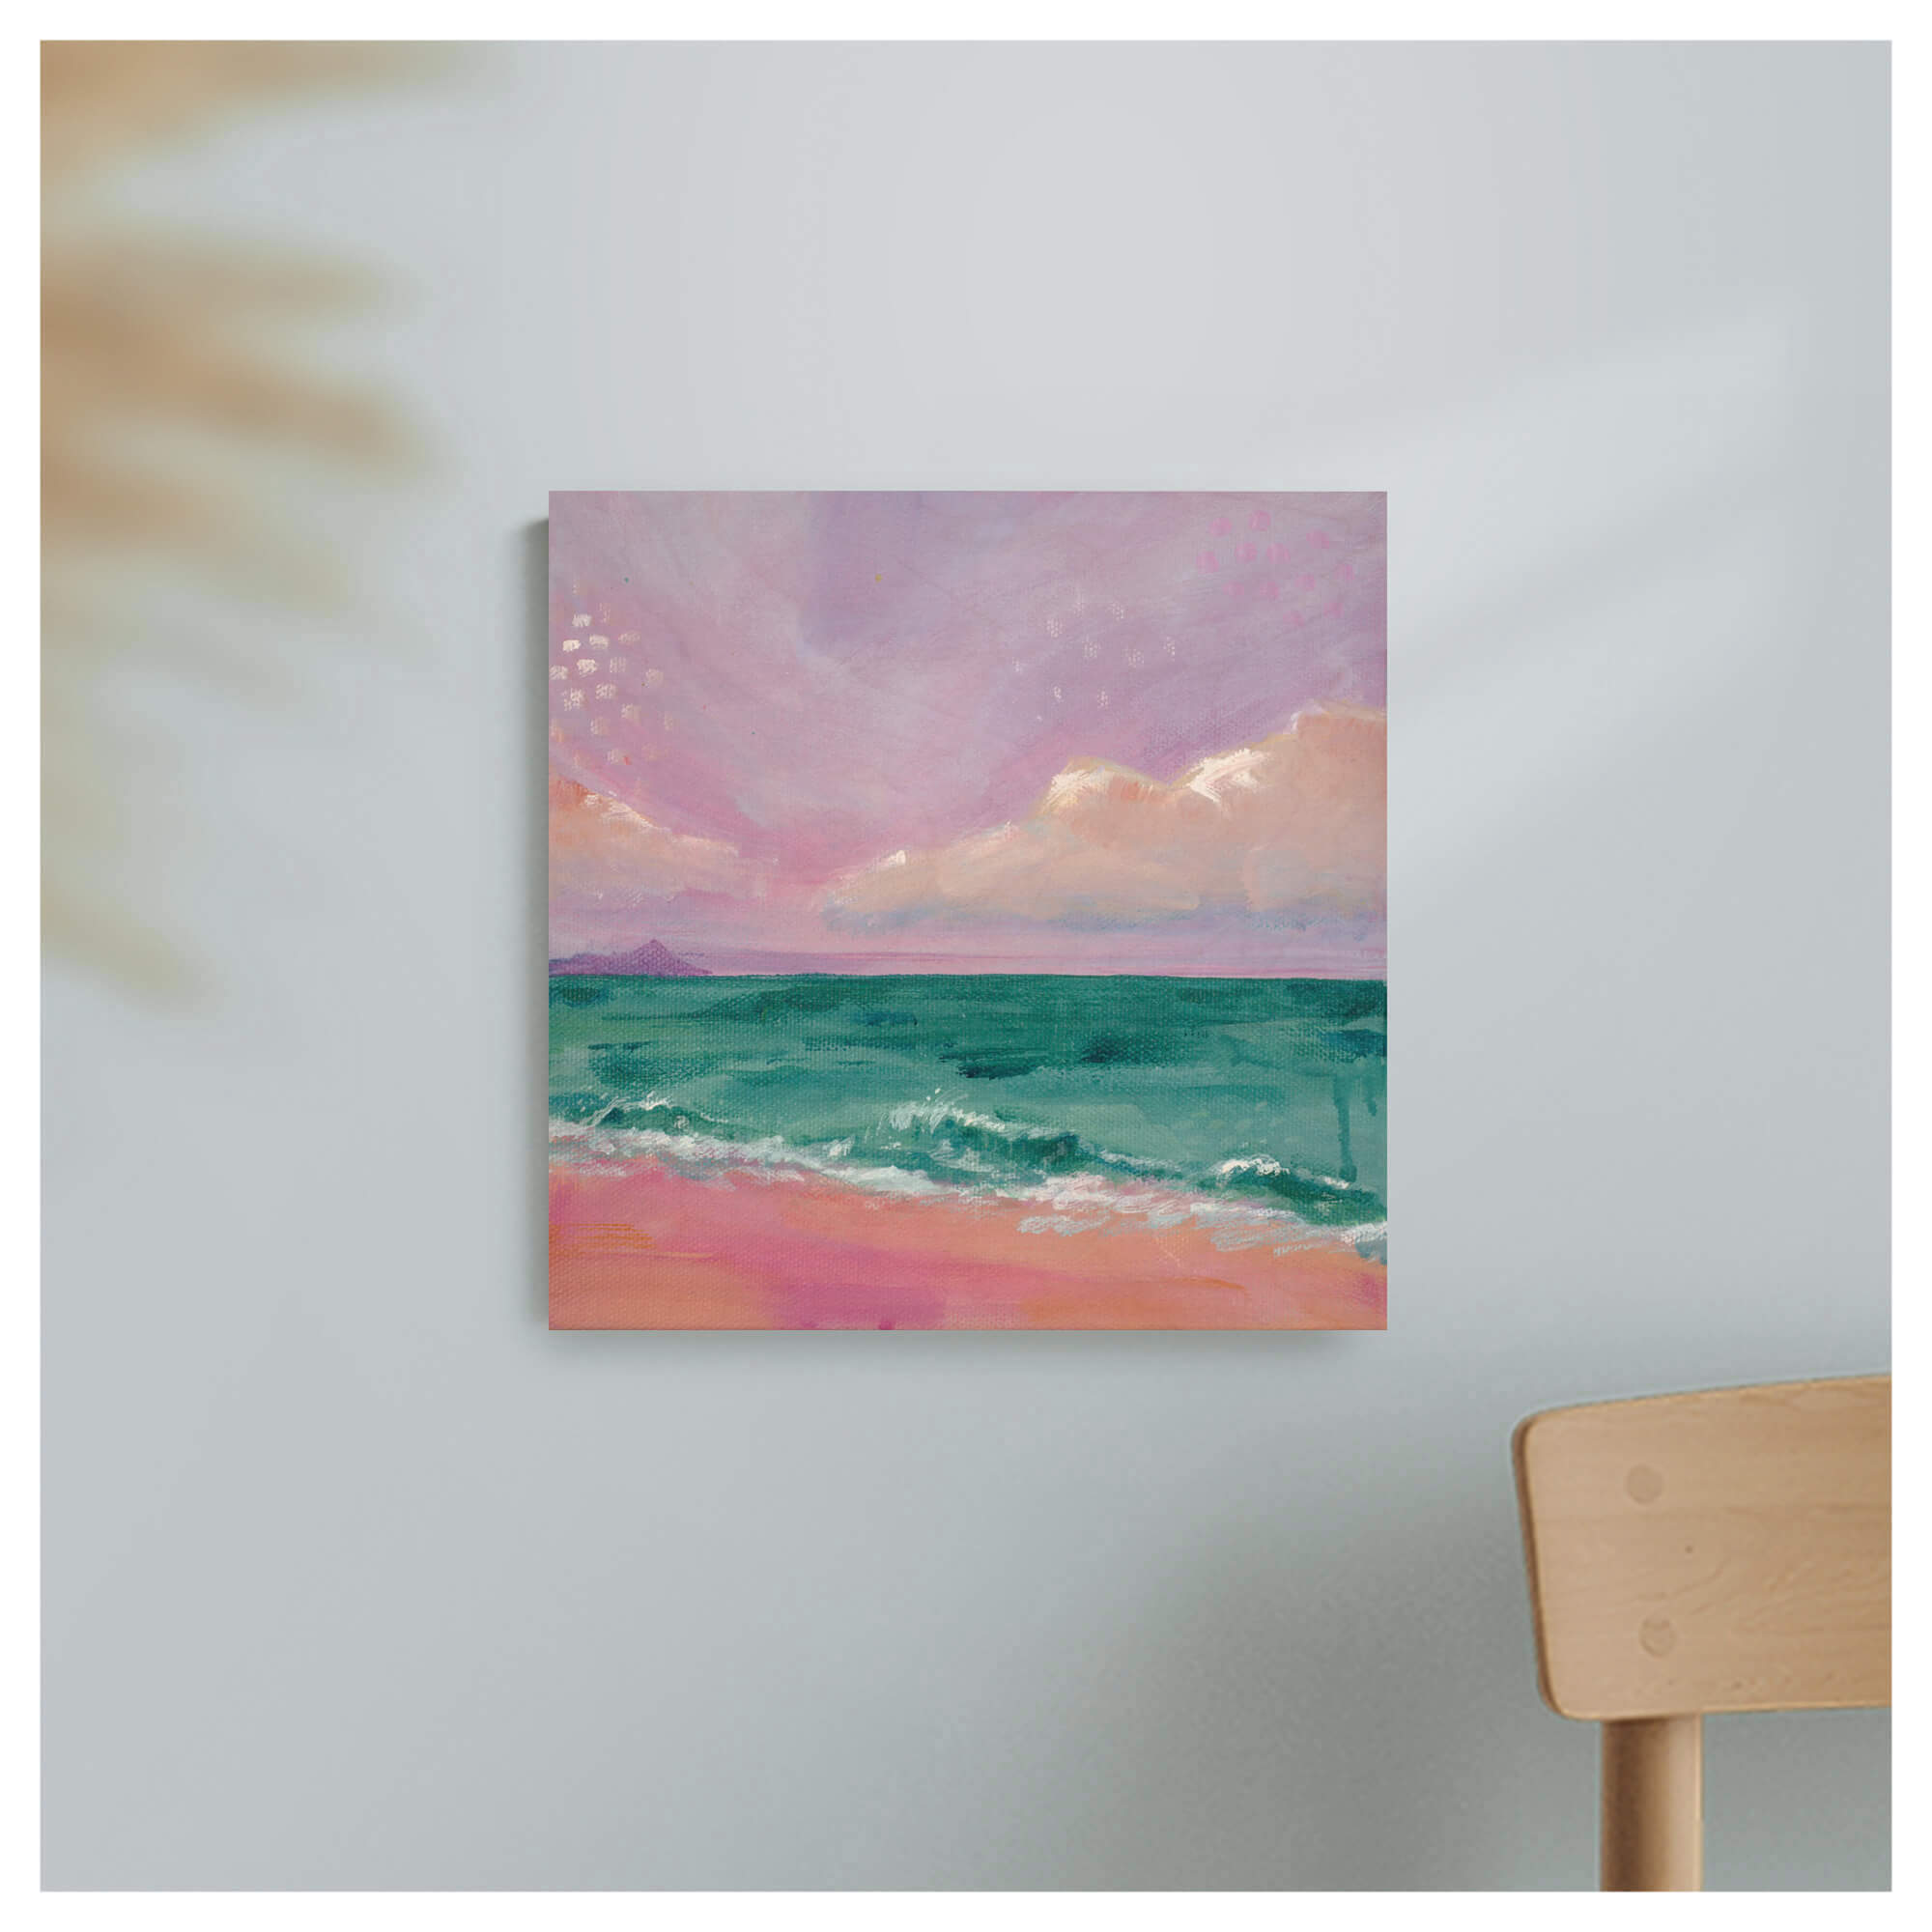 Dream-like purple hued sky seascape by Hawaii artist Lindsay Wilkins